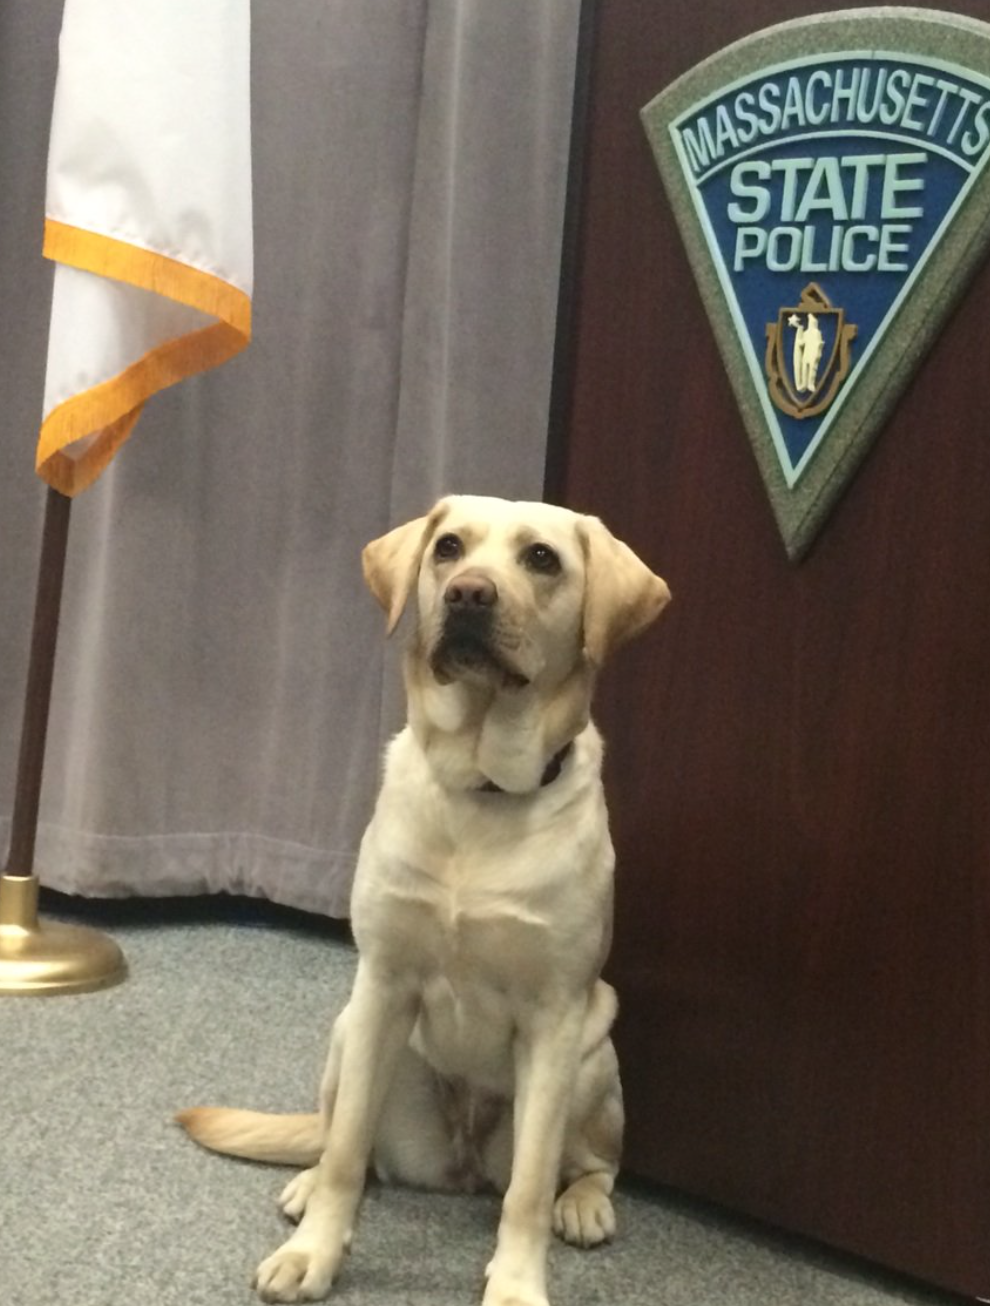 Massachusetts State Police,labrador retriever,bomb sniffing dog,police dog,